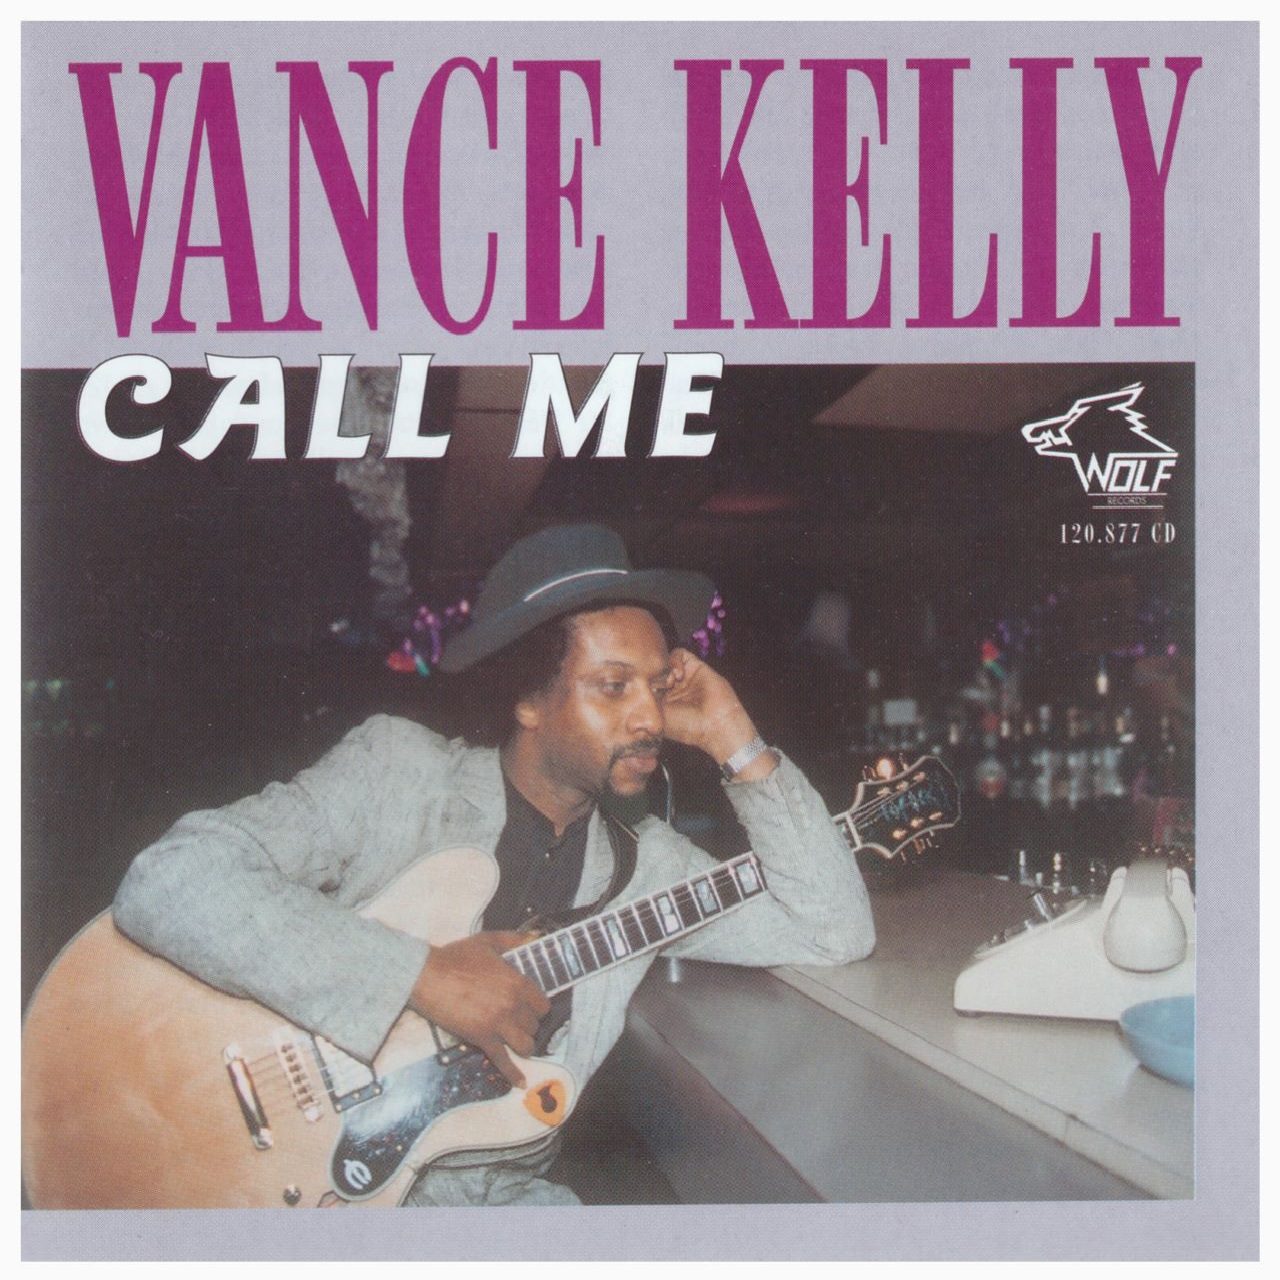 Vance Kelly – Call Me cover album